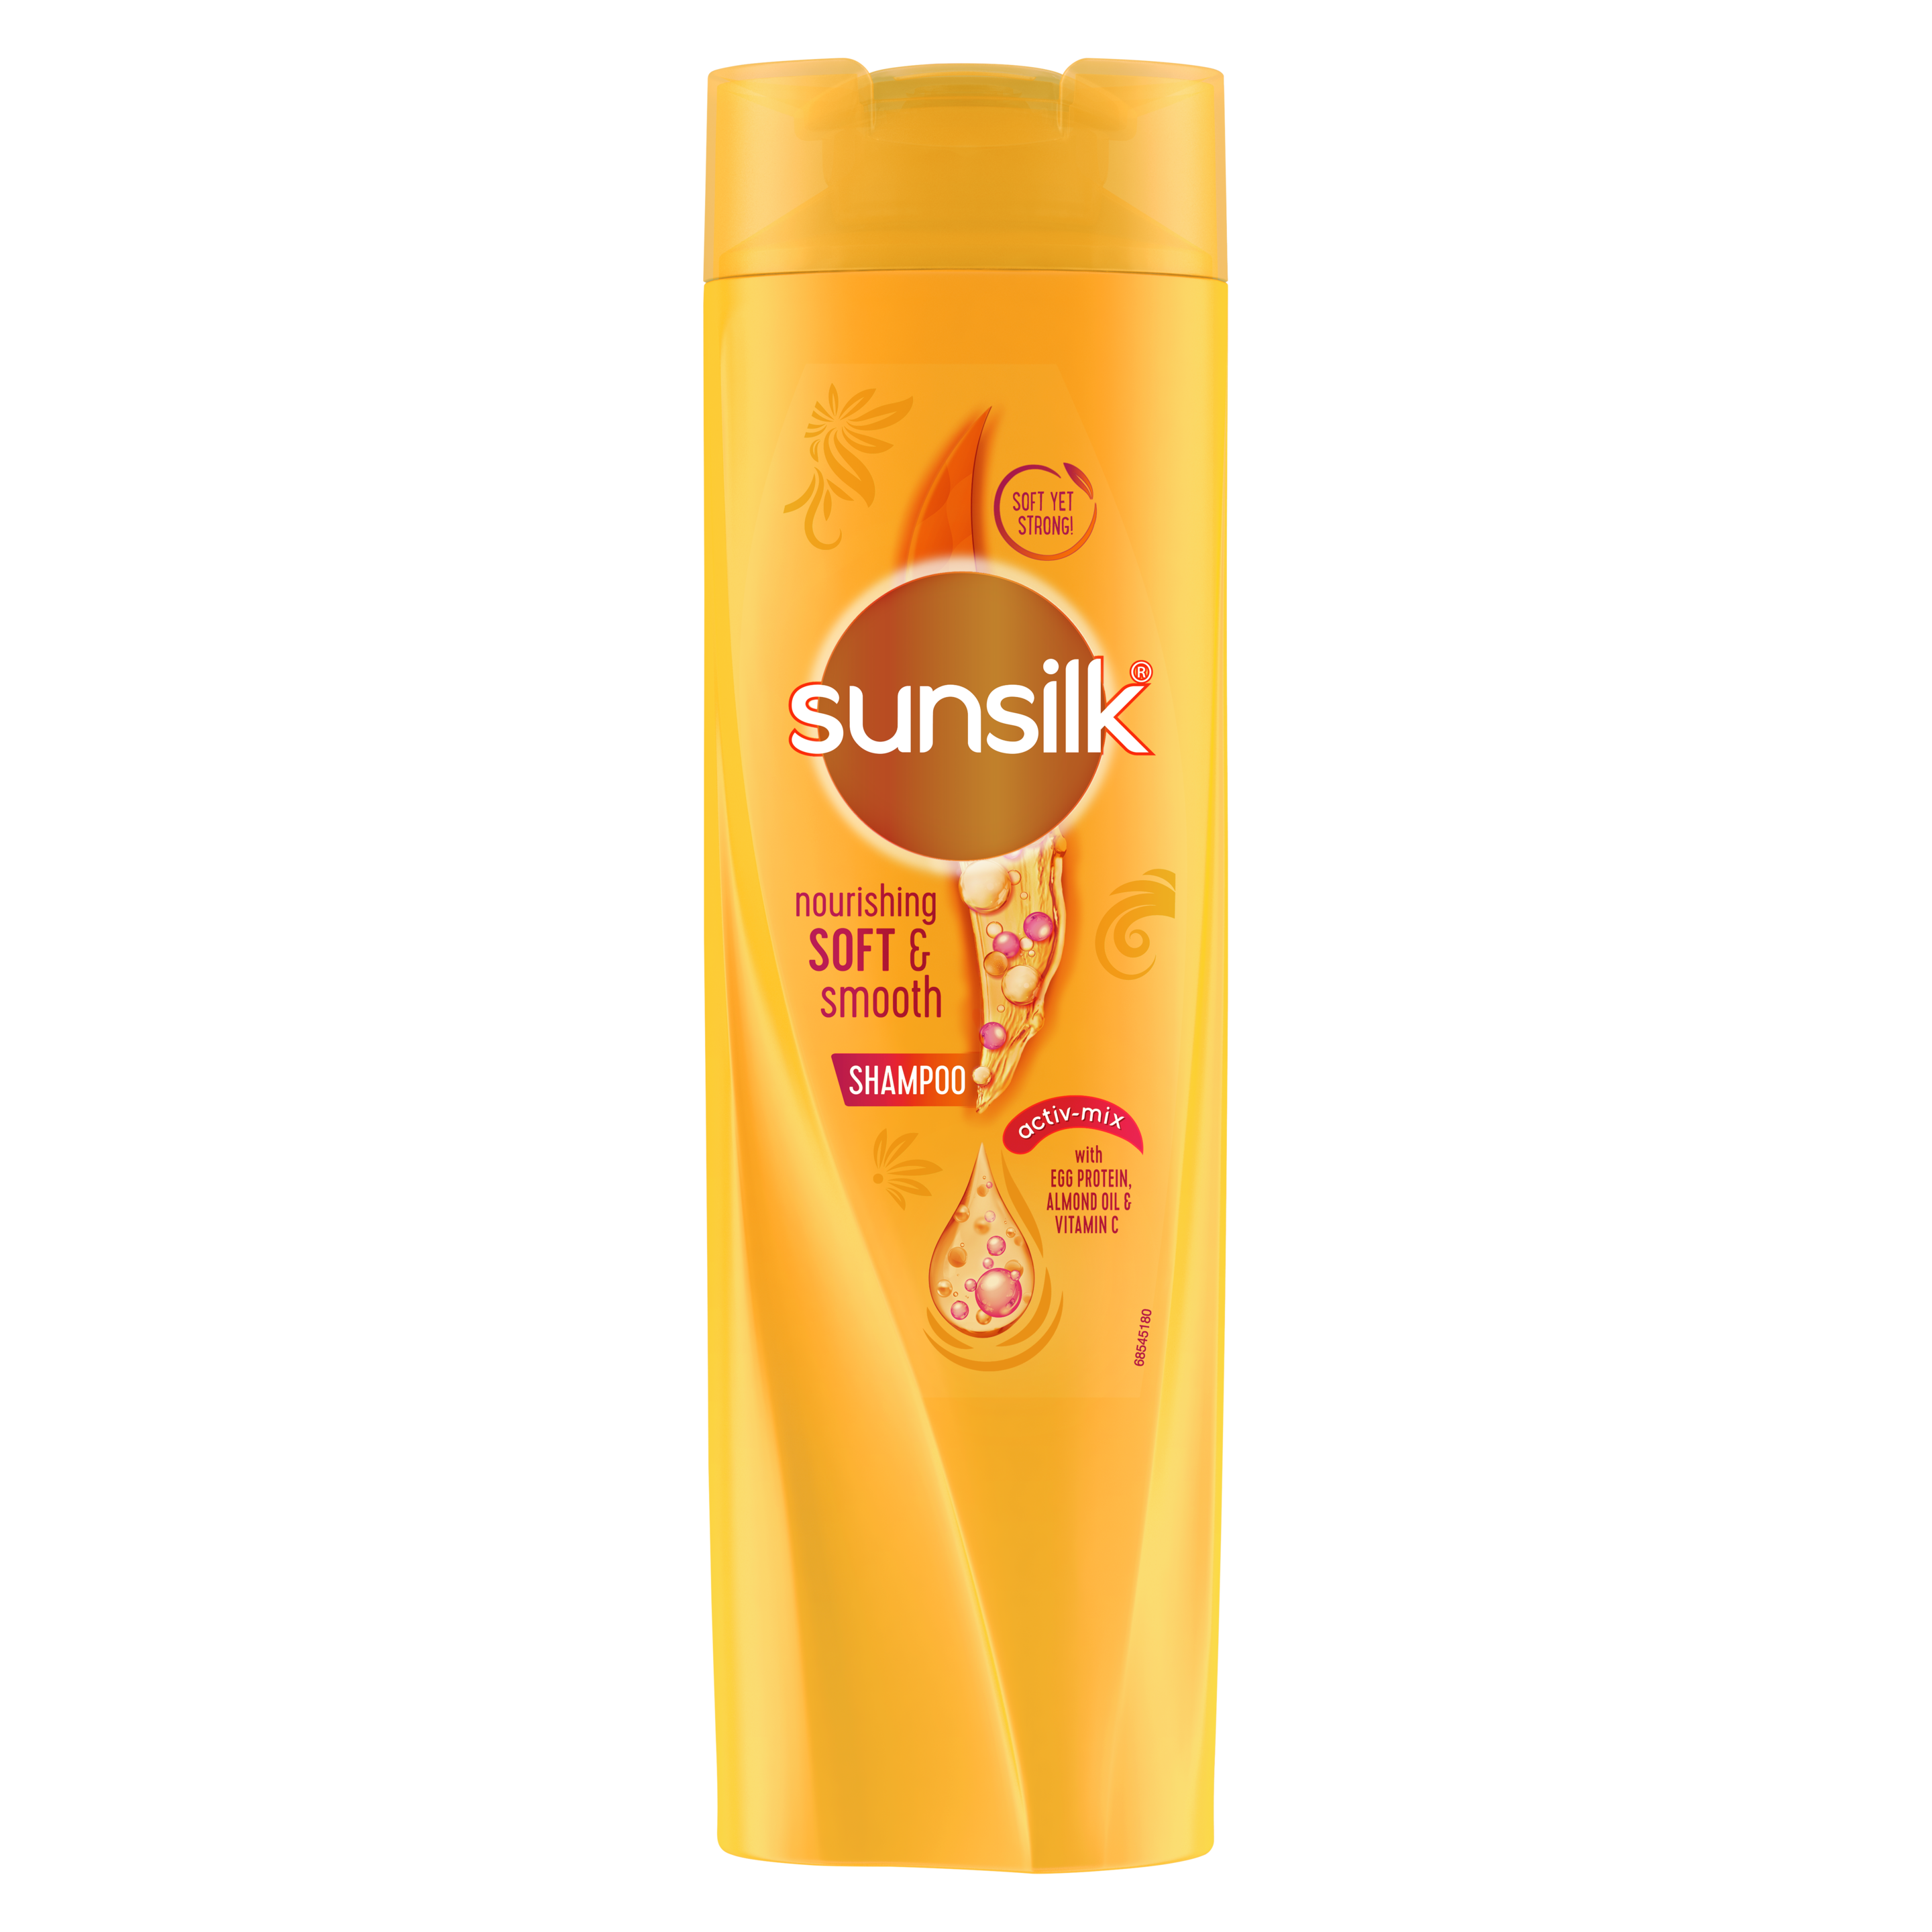 Sunsilk Nourishing Soft & Smooth Shampoo With Egg Protein